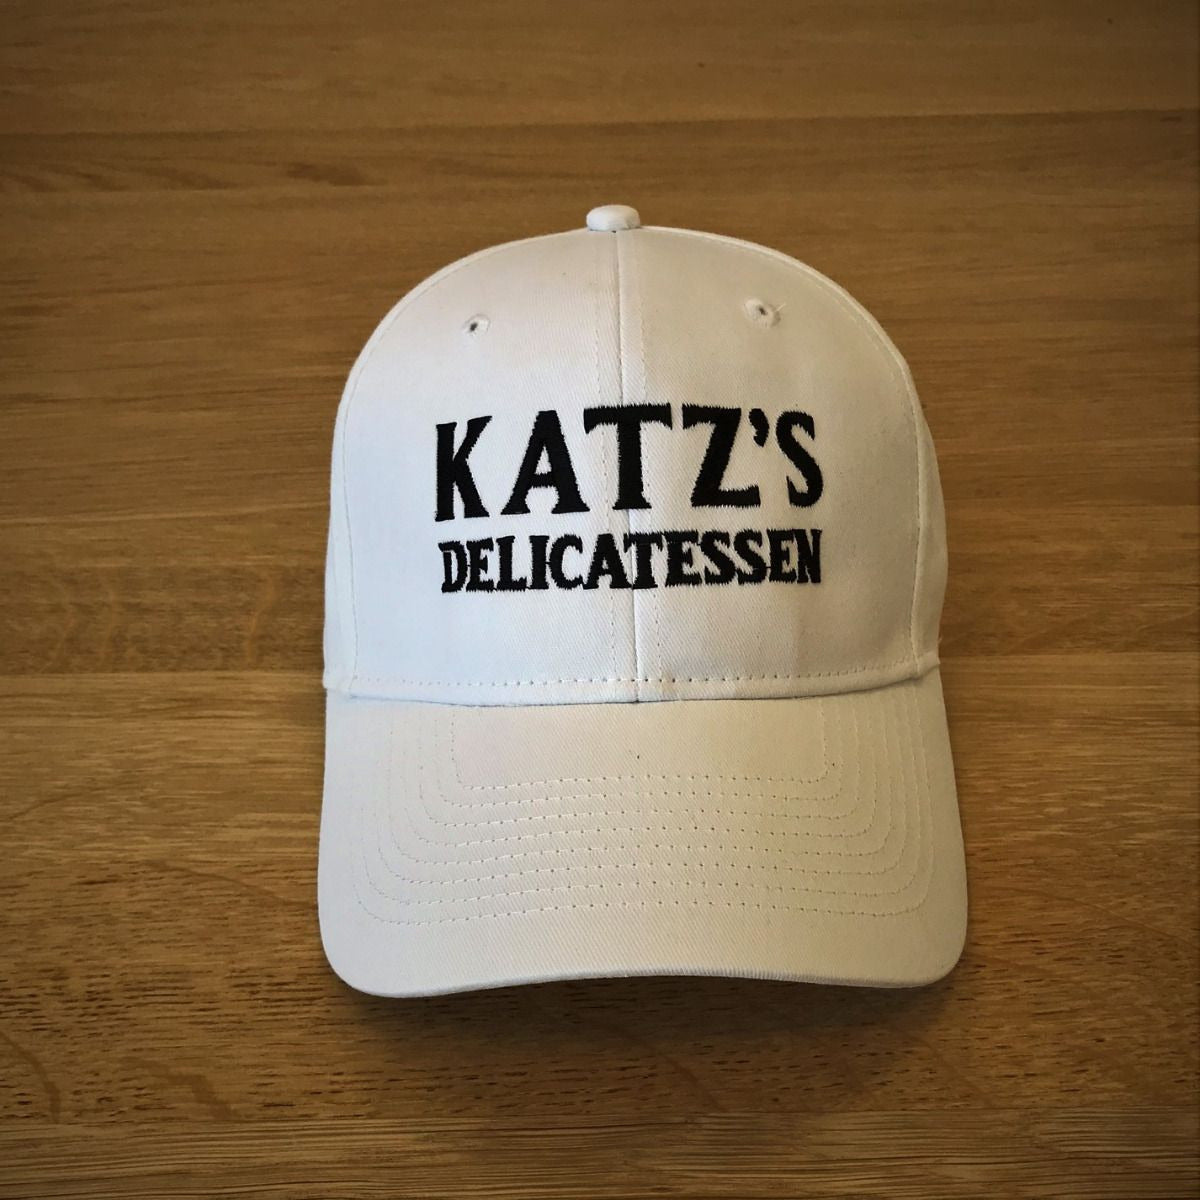 Katz's Delicatessen Katz's Deli Classic Hat